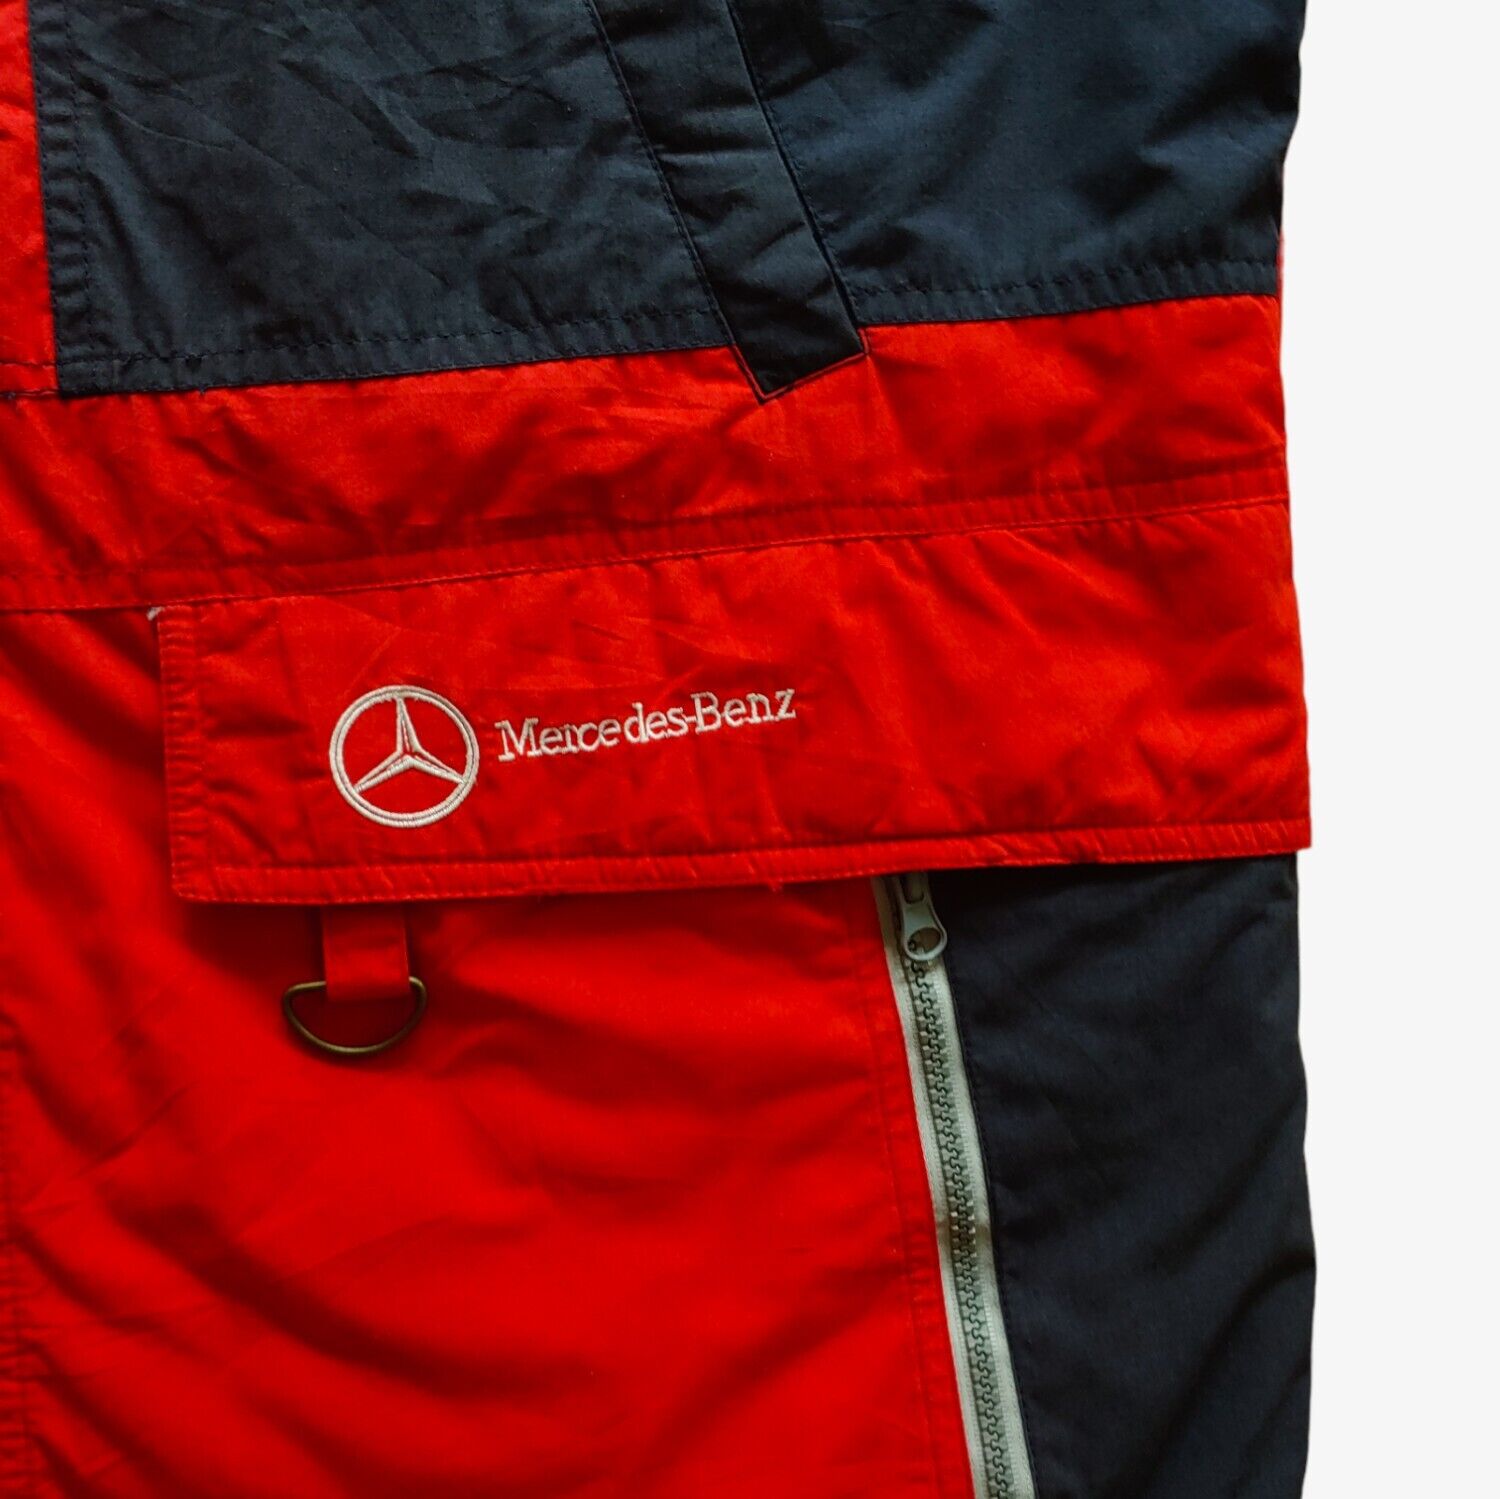 Vintage 90s Mercedes Benz Utility Tactical Jacket Logo - Casspios Dream